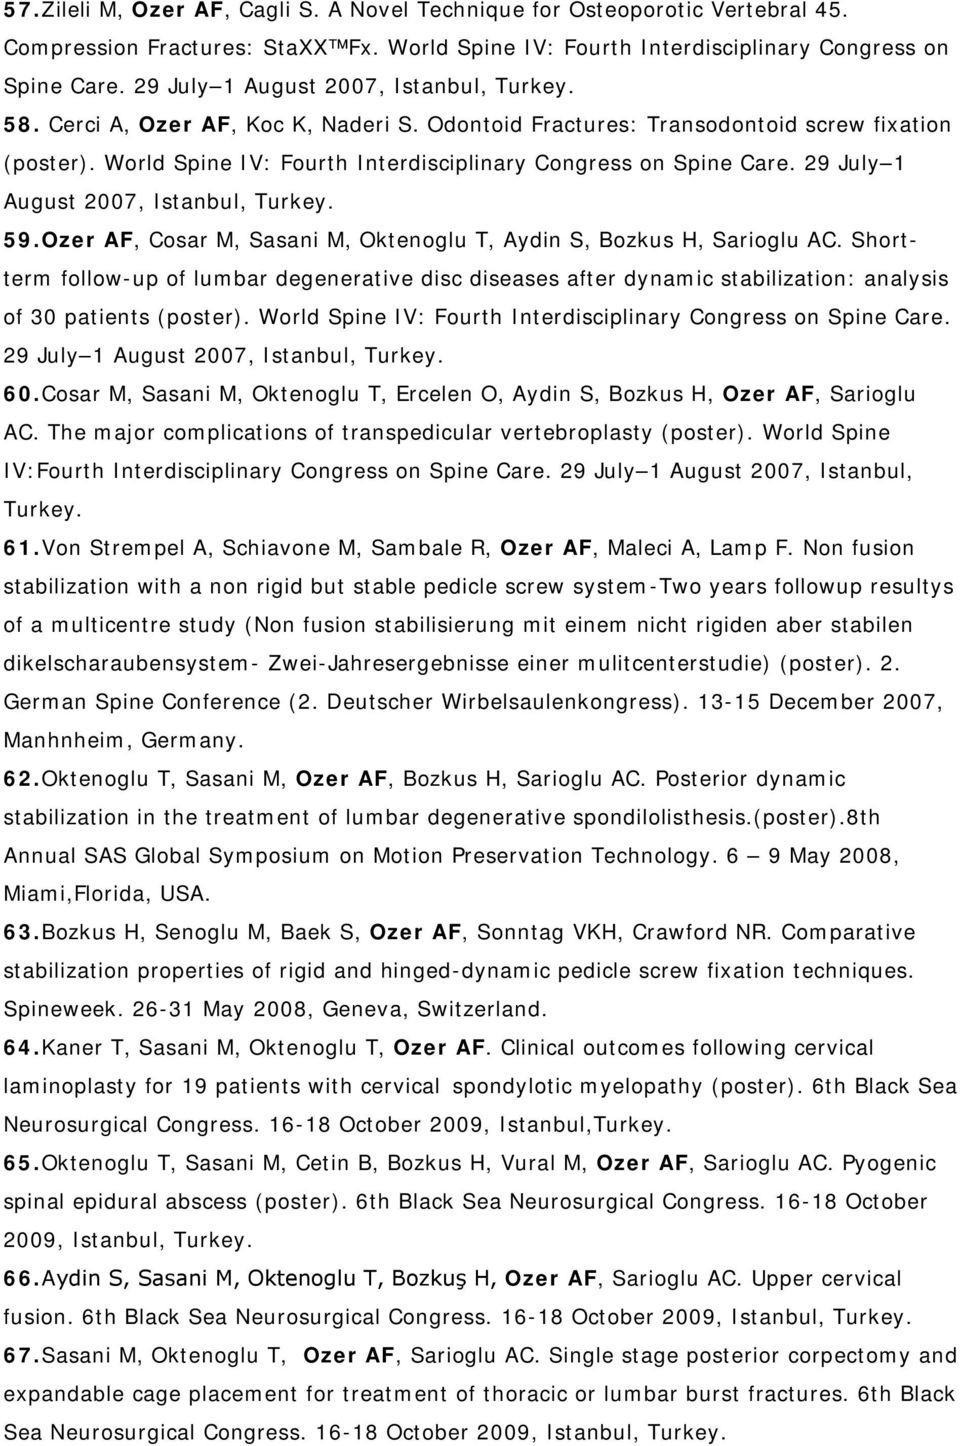 World Spine IV: Fourth Interdisciplinary Congress on Spine Care. 29 July 1 August 2007, Istanbul, Turkey. 59. Ozer AF, Cosar M, Sasani M, Oktenoglu T, Aydin S, Bozkus H, Sarioglu AC.